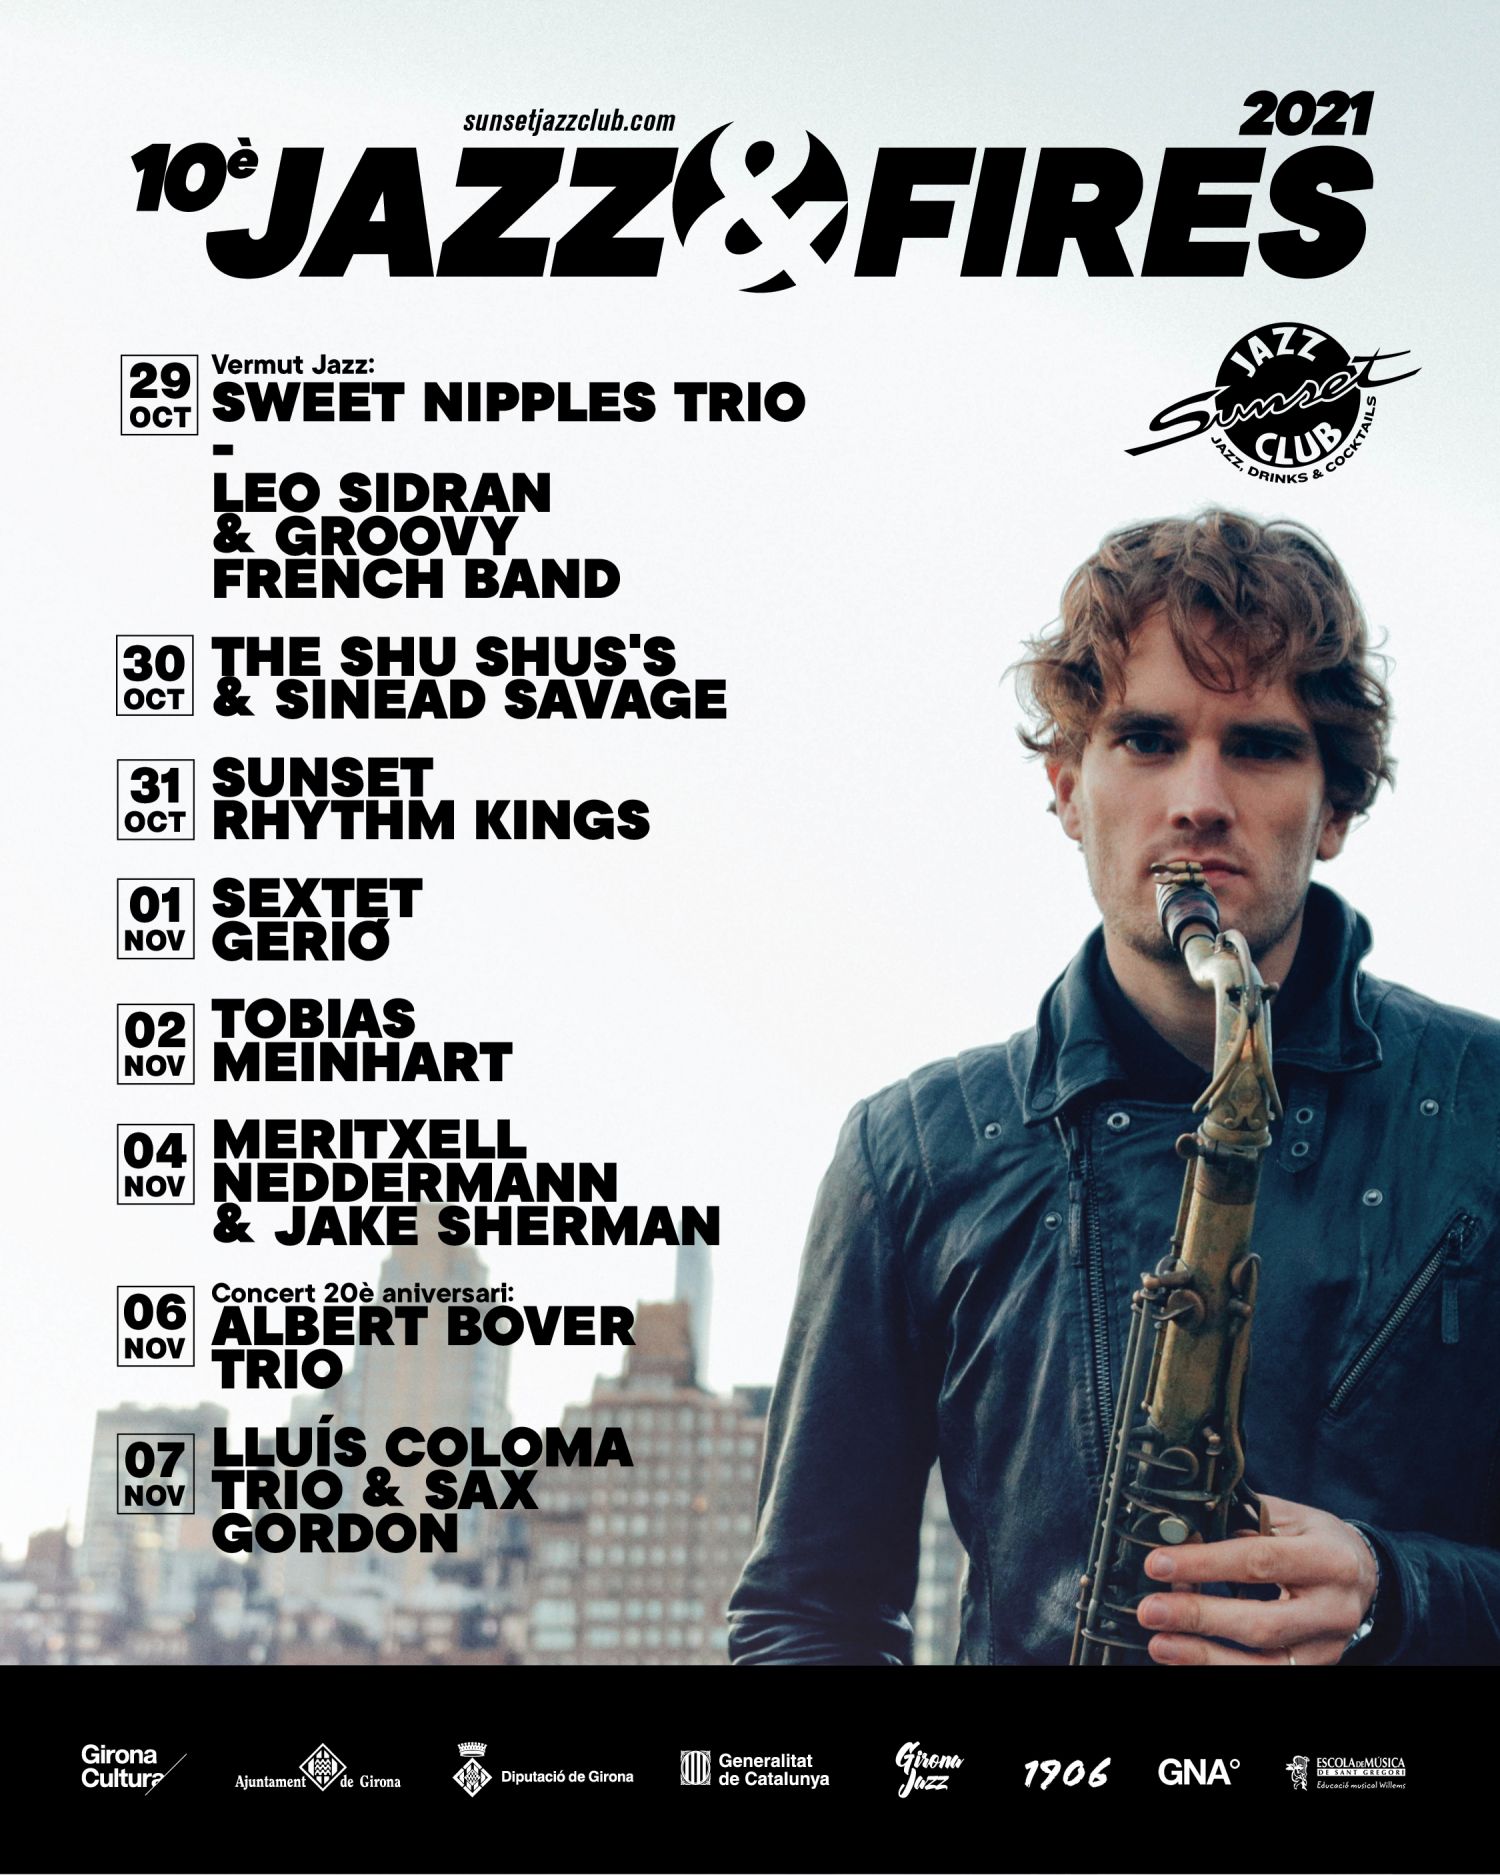 Concert de Tobias Meinhart  - 10è Jazz & Fires